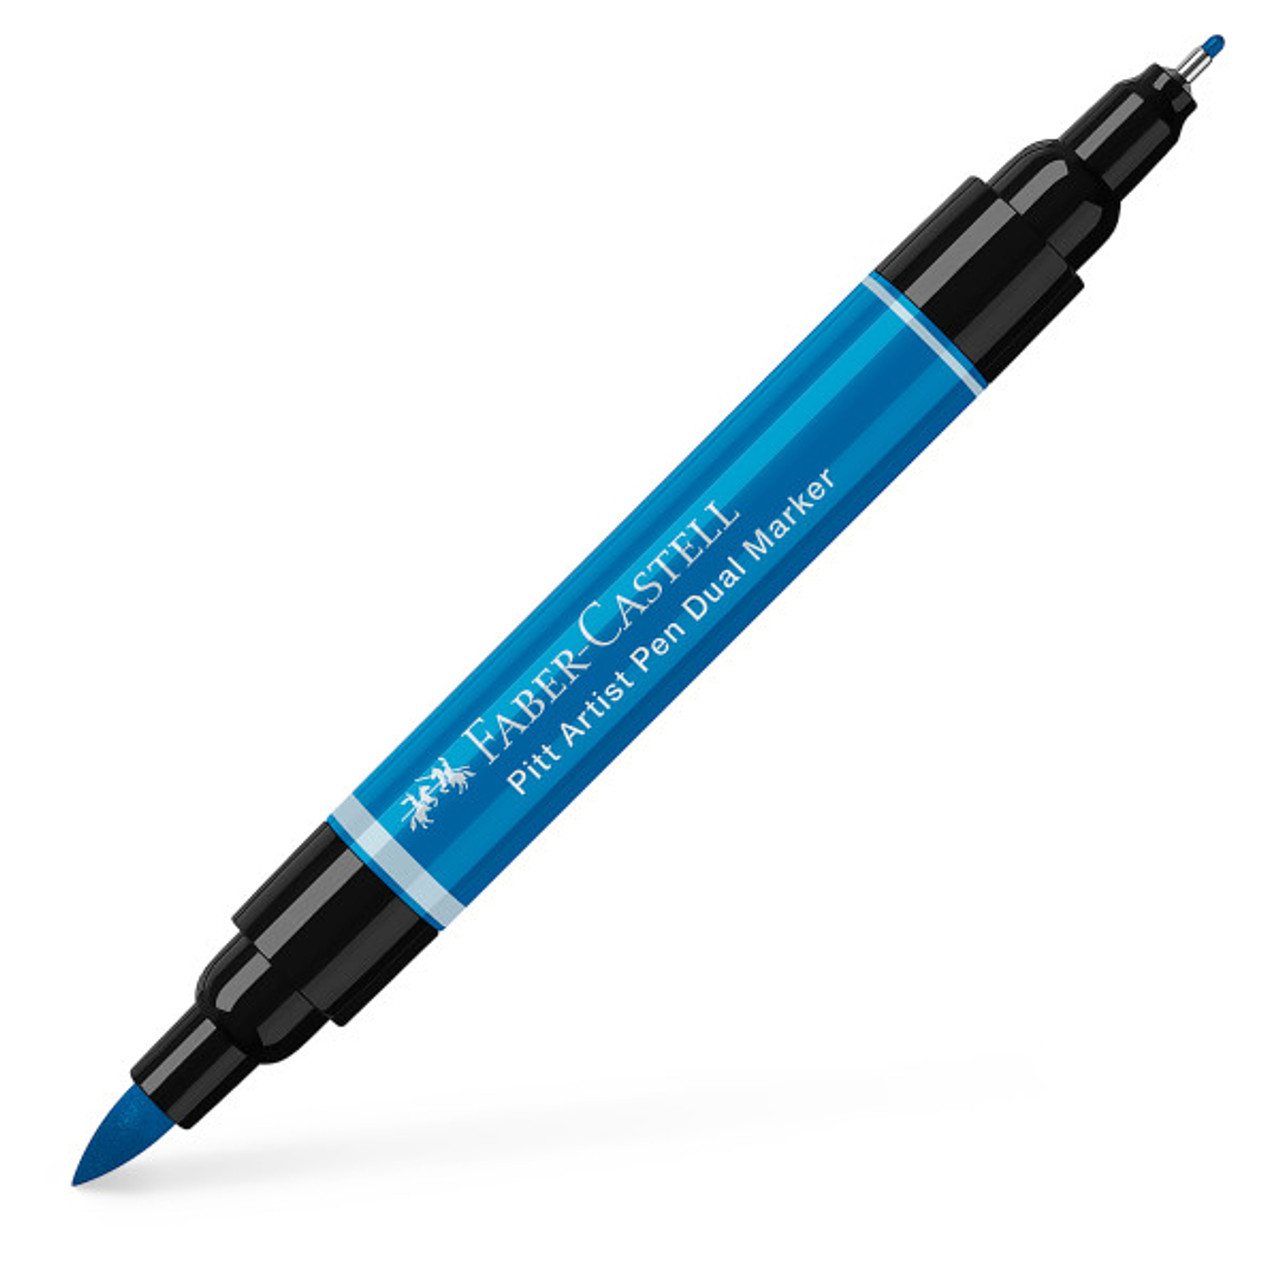 110 Phthalo Blue - Buy 4, Get 1 Free - Pitt Artist Pen Dual Marker - Faber Castell